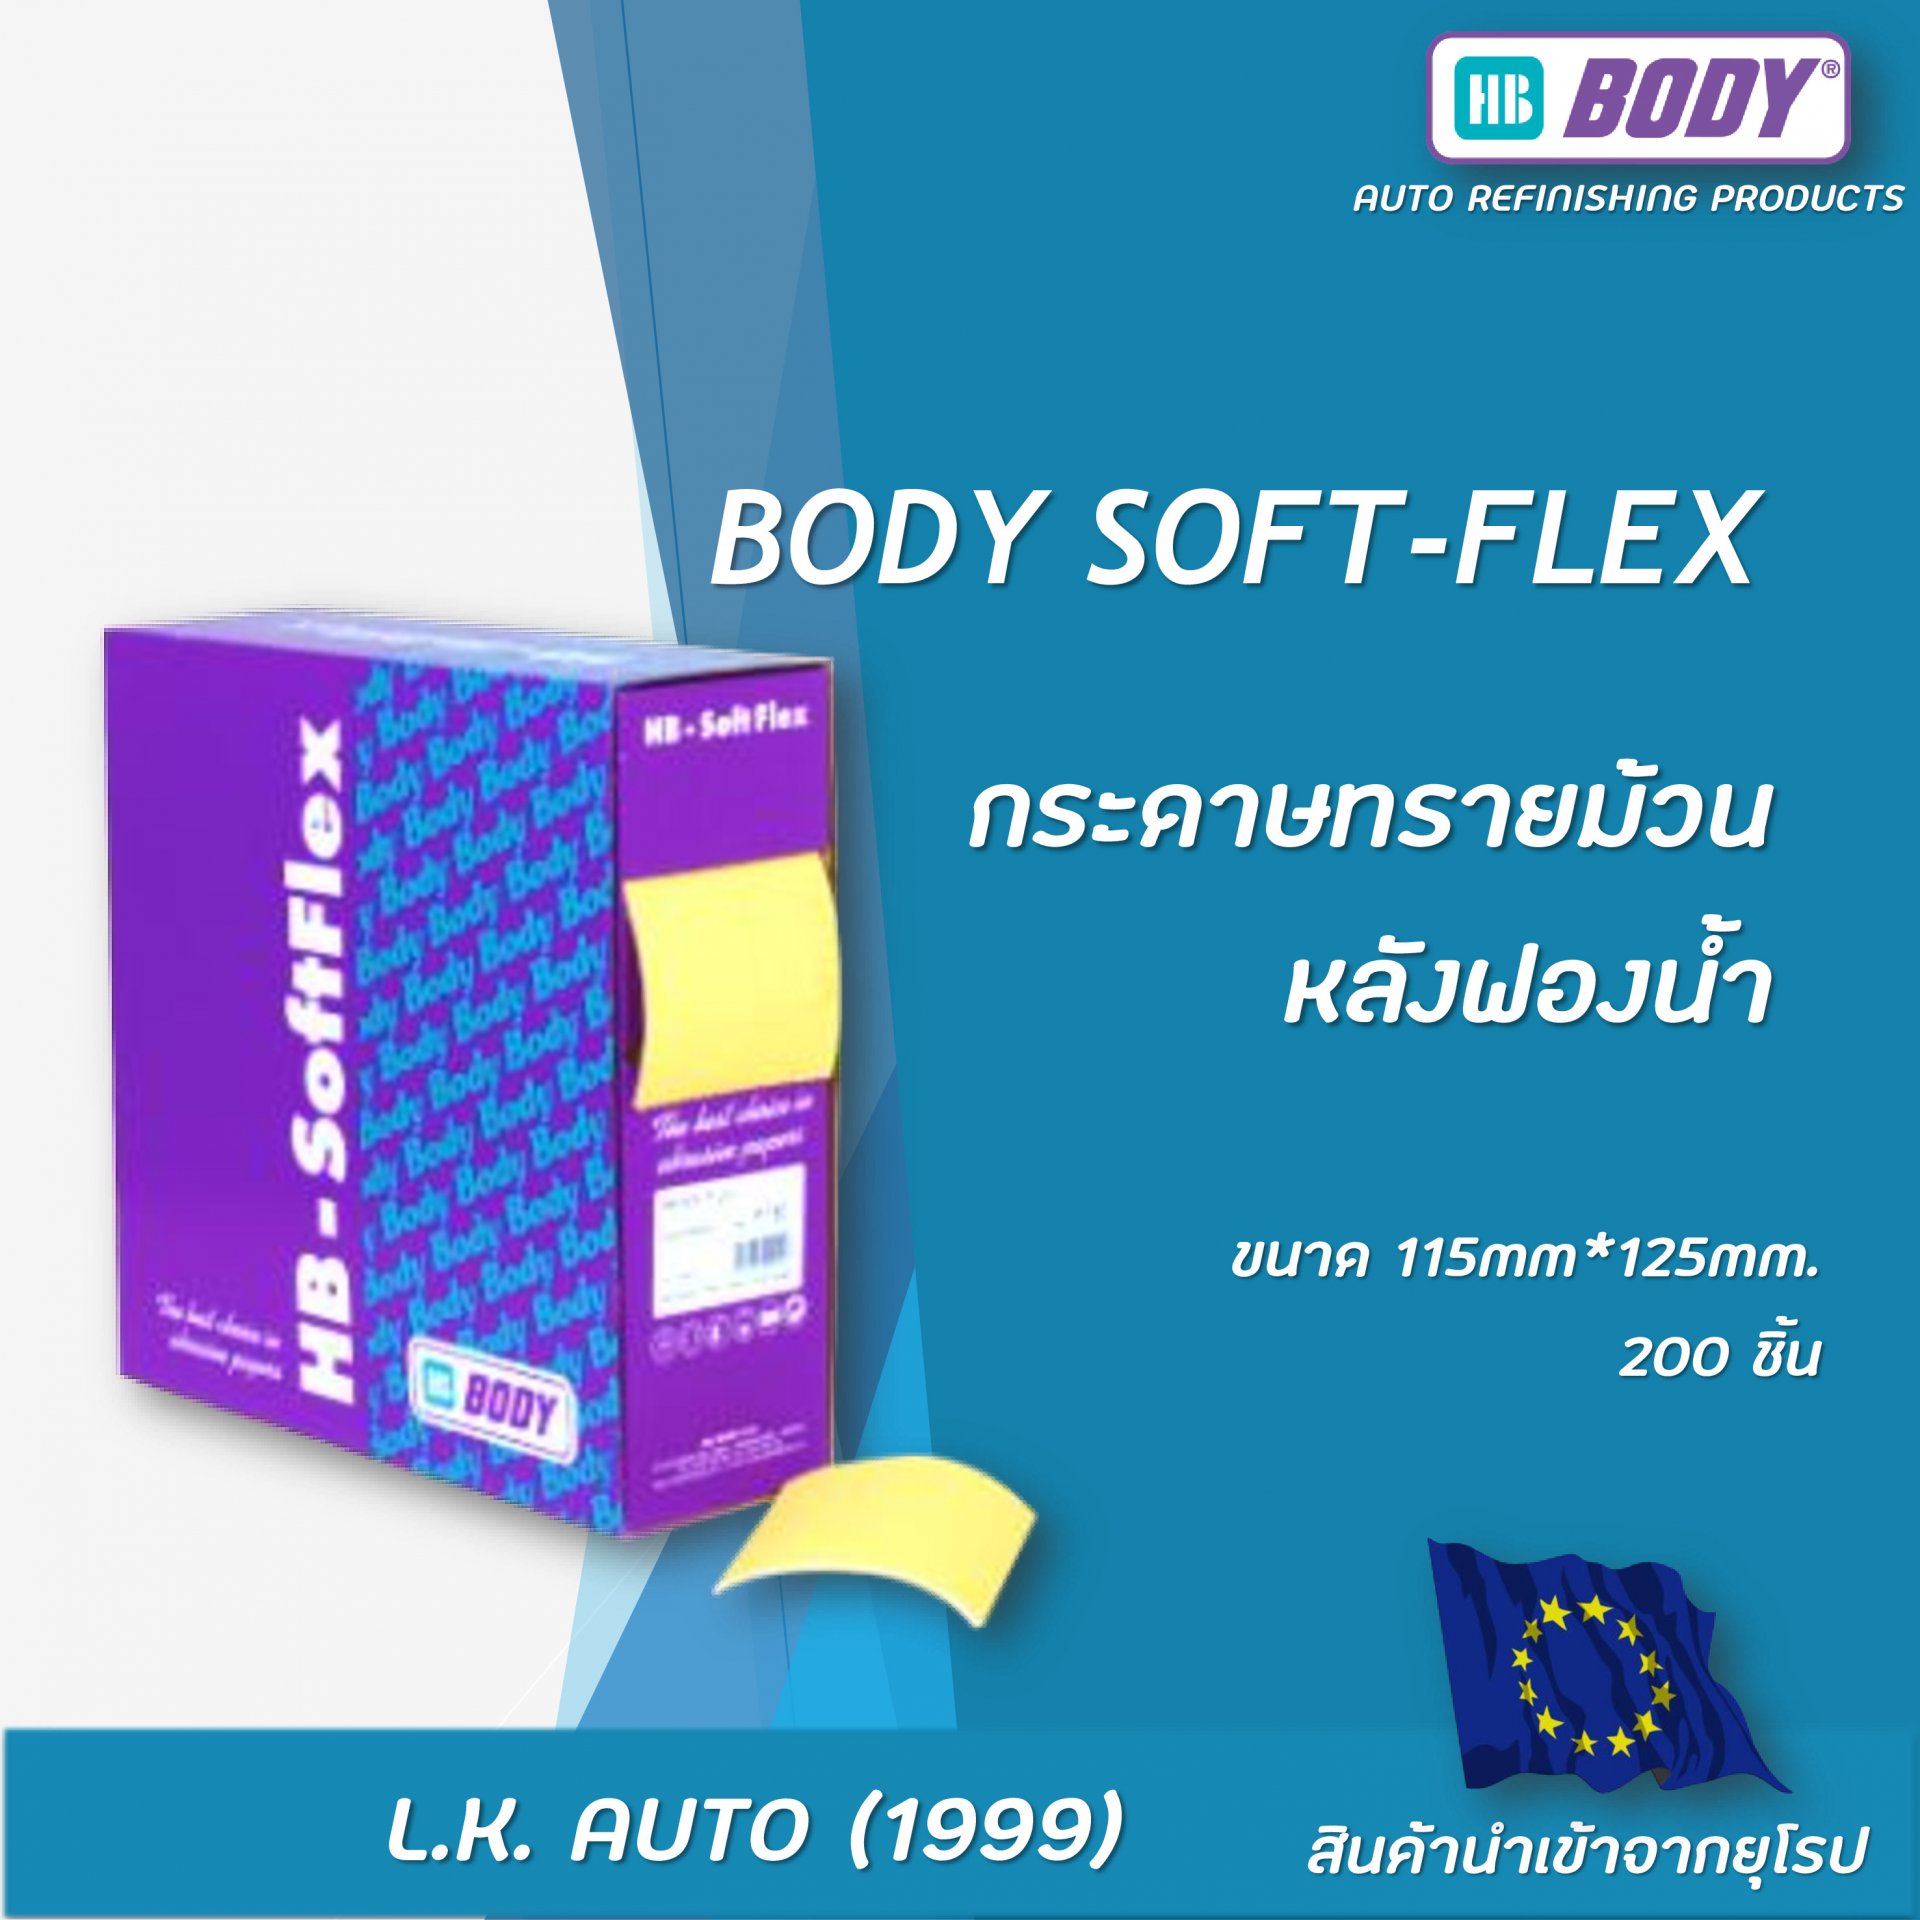 BODY SOFT-FLEX